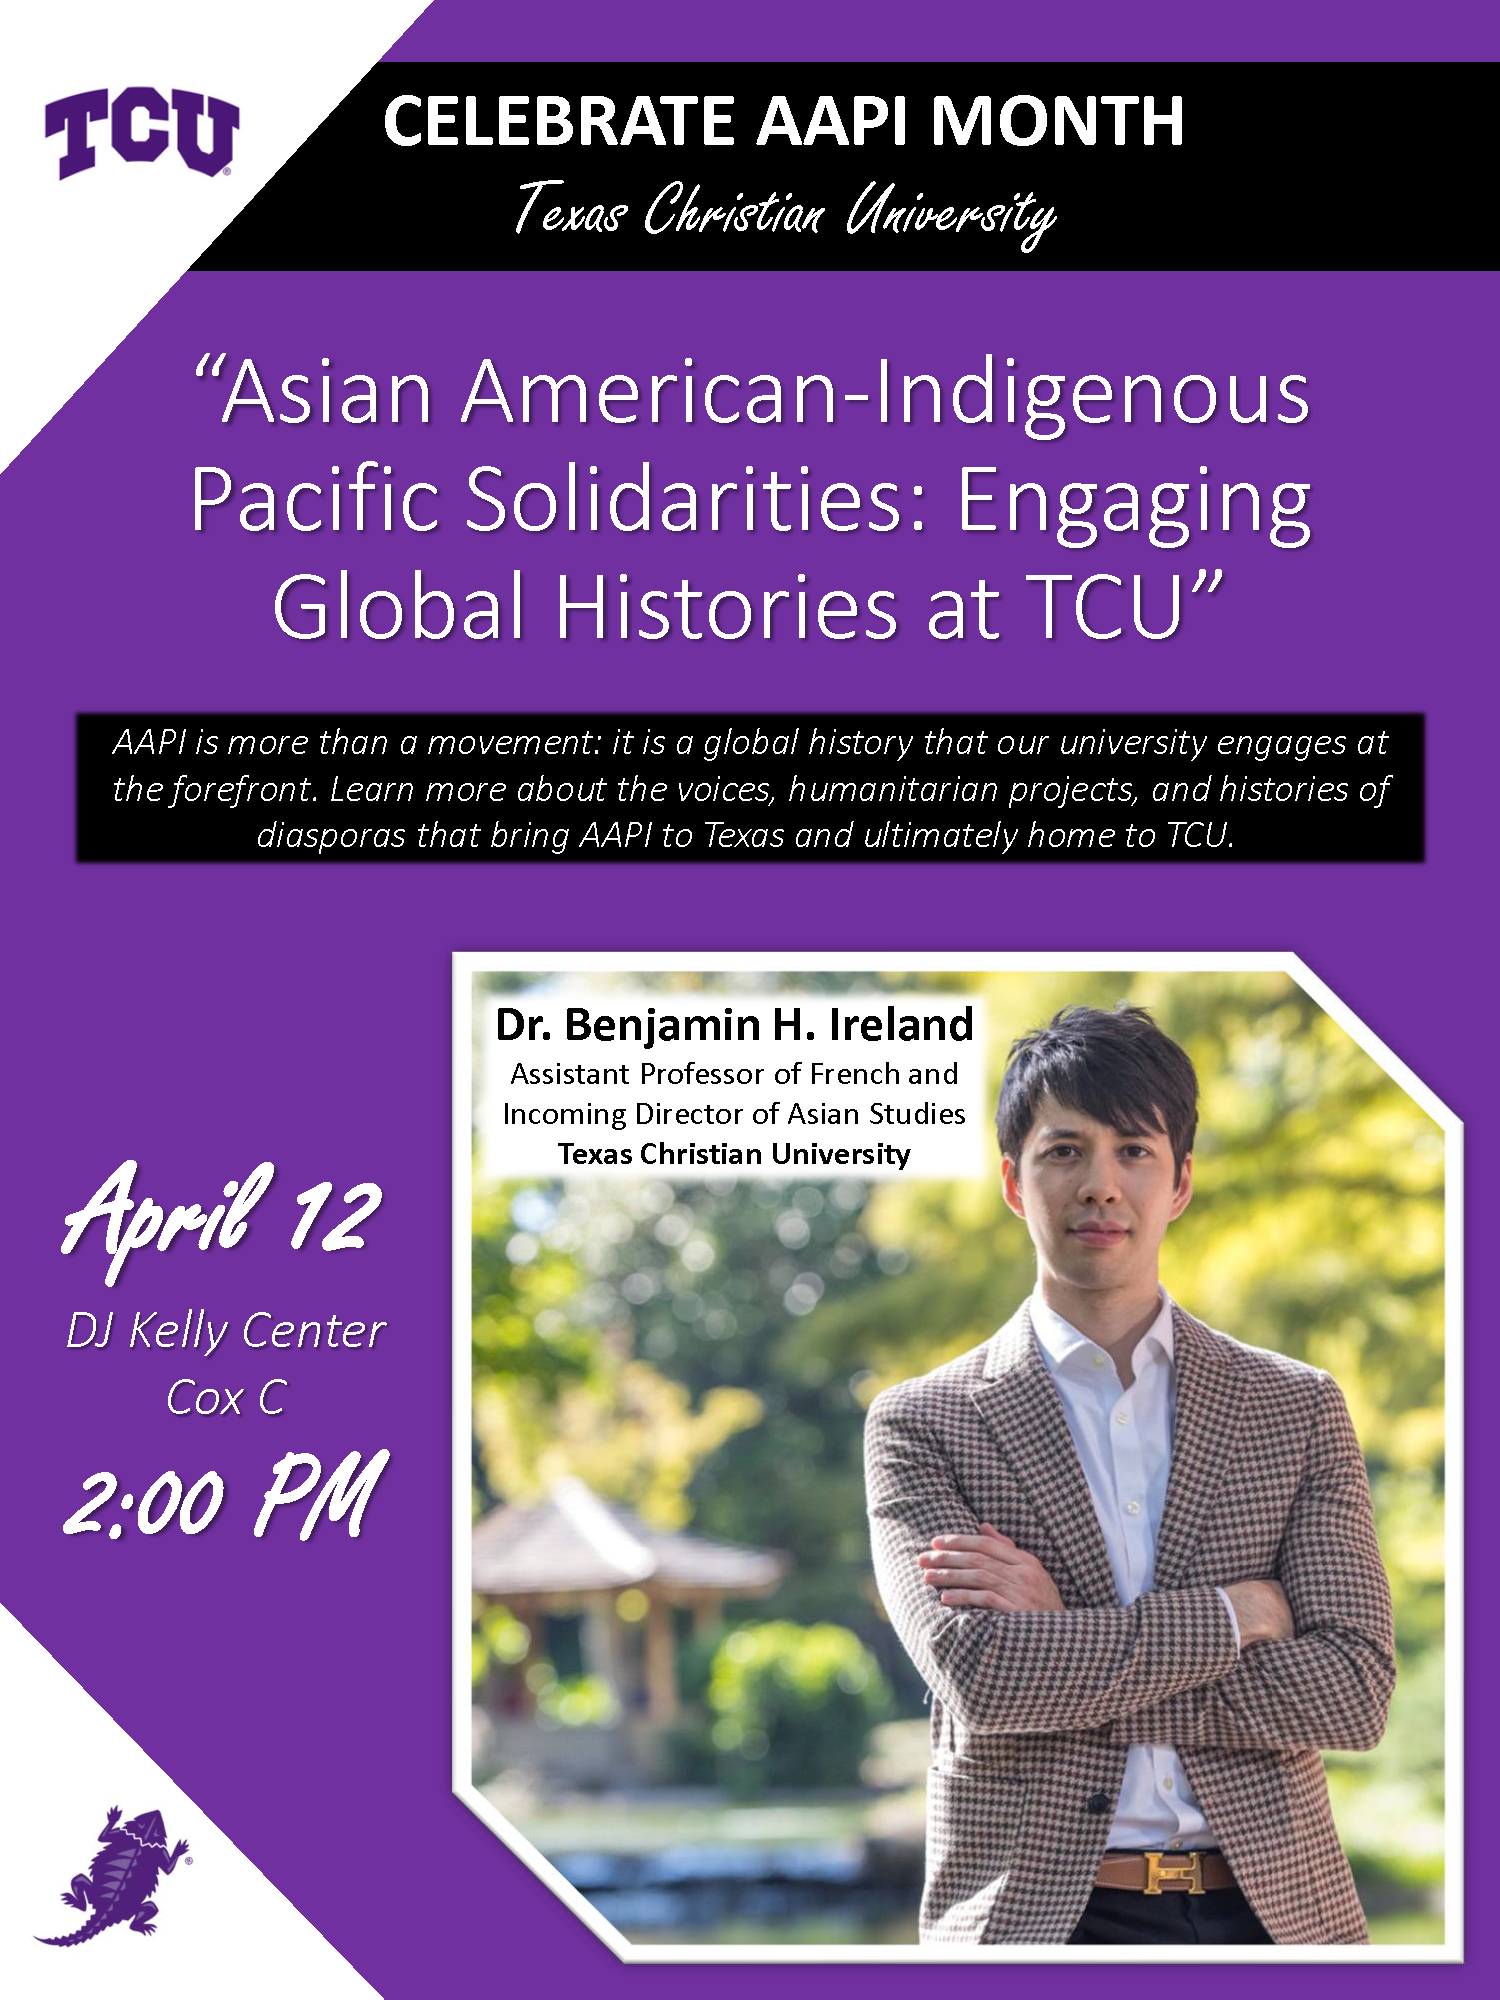 Benjamin Ireland, Ph.D., will lecture on "Asian American-Indigenous Pacific Solidarities: Engaging Global Histories at TCU" on April 12